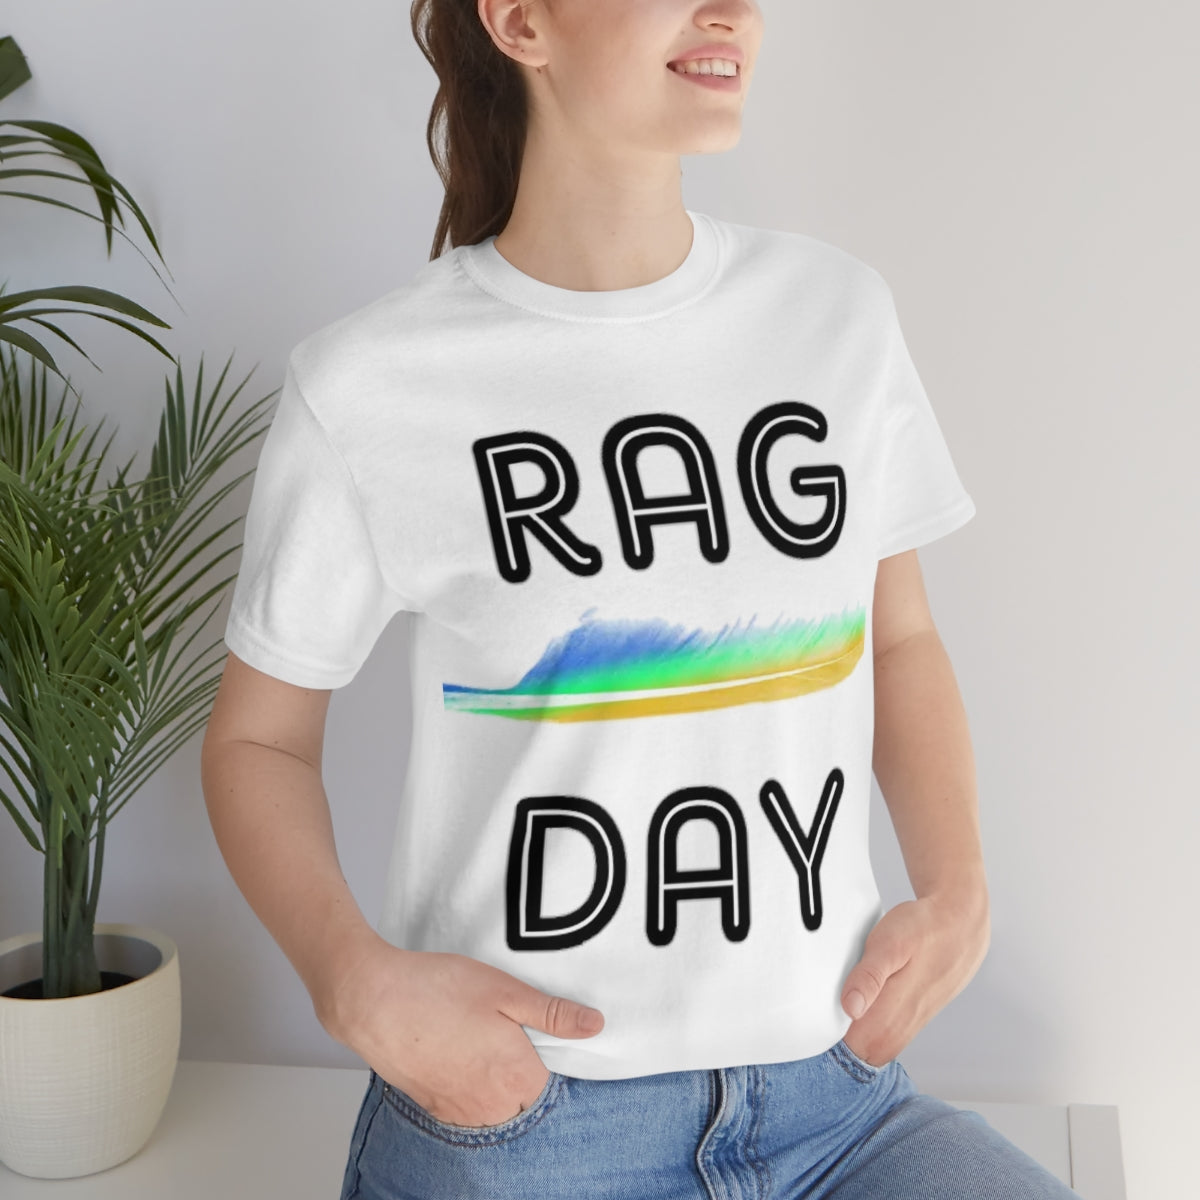 Rag day - Designed - Unisex Short Sleeve Tee